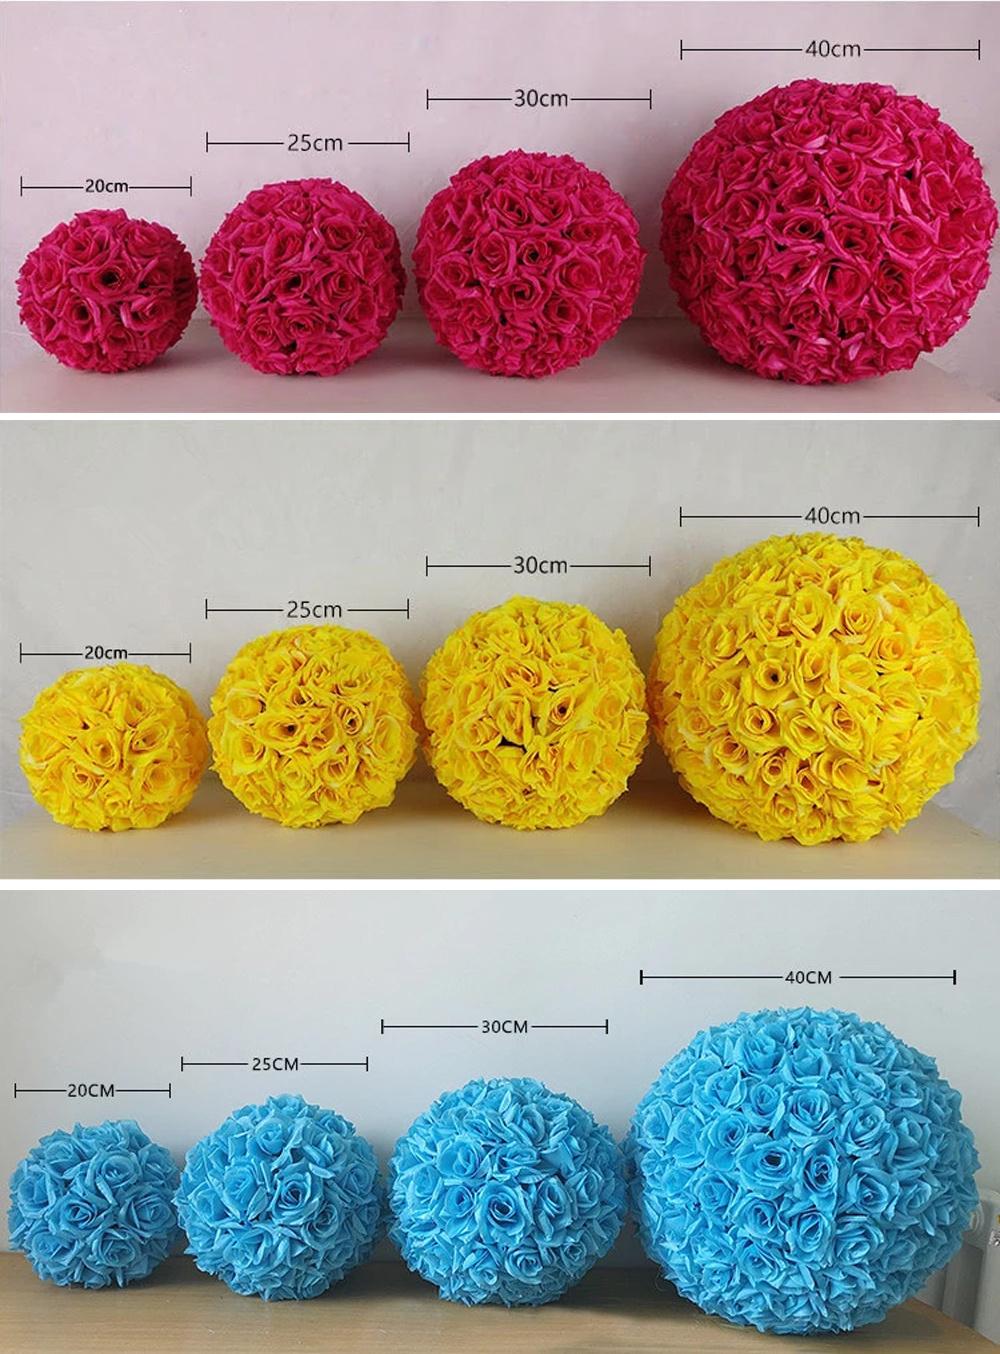 Popular Styles of Artificial Flower Balls, Flower Balls for Wedding Decoration